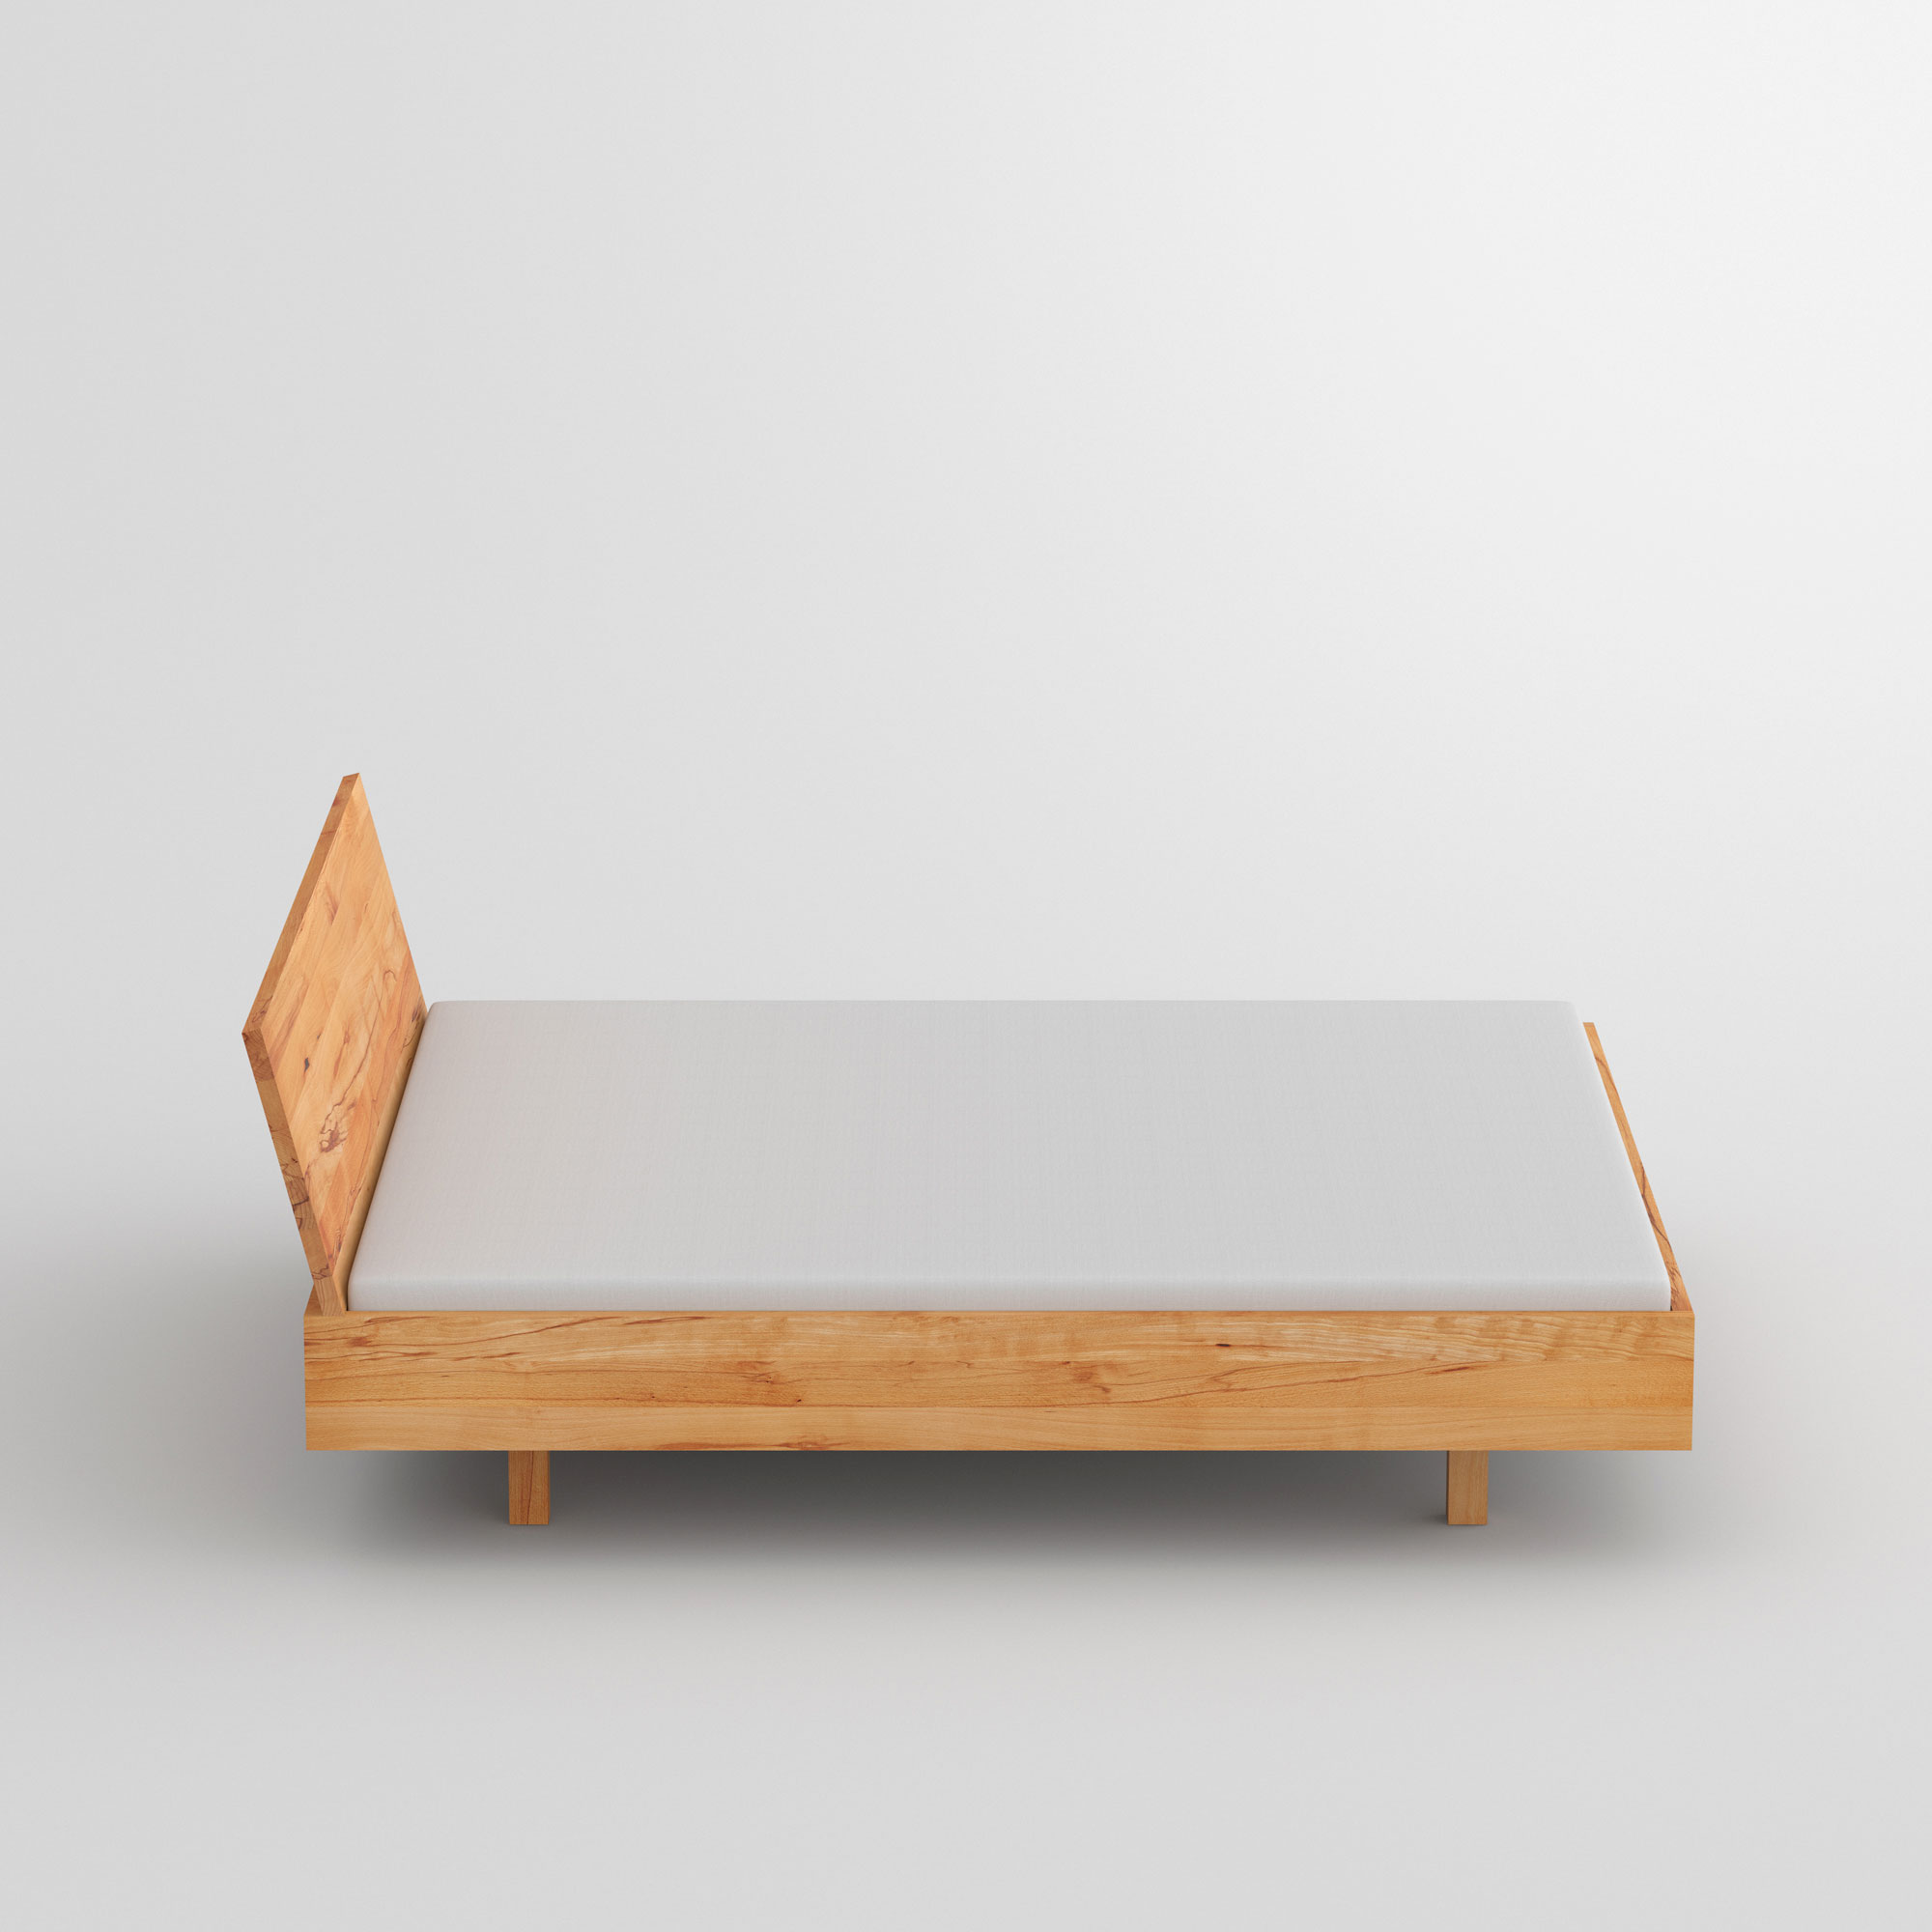 Design Bed QUADRA cam2 custom made in solid wood by vitamin design